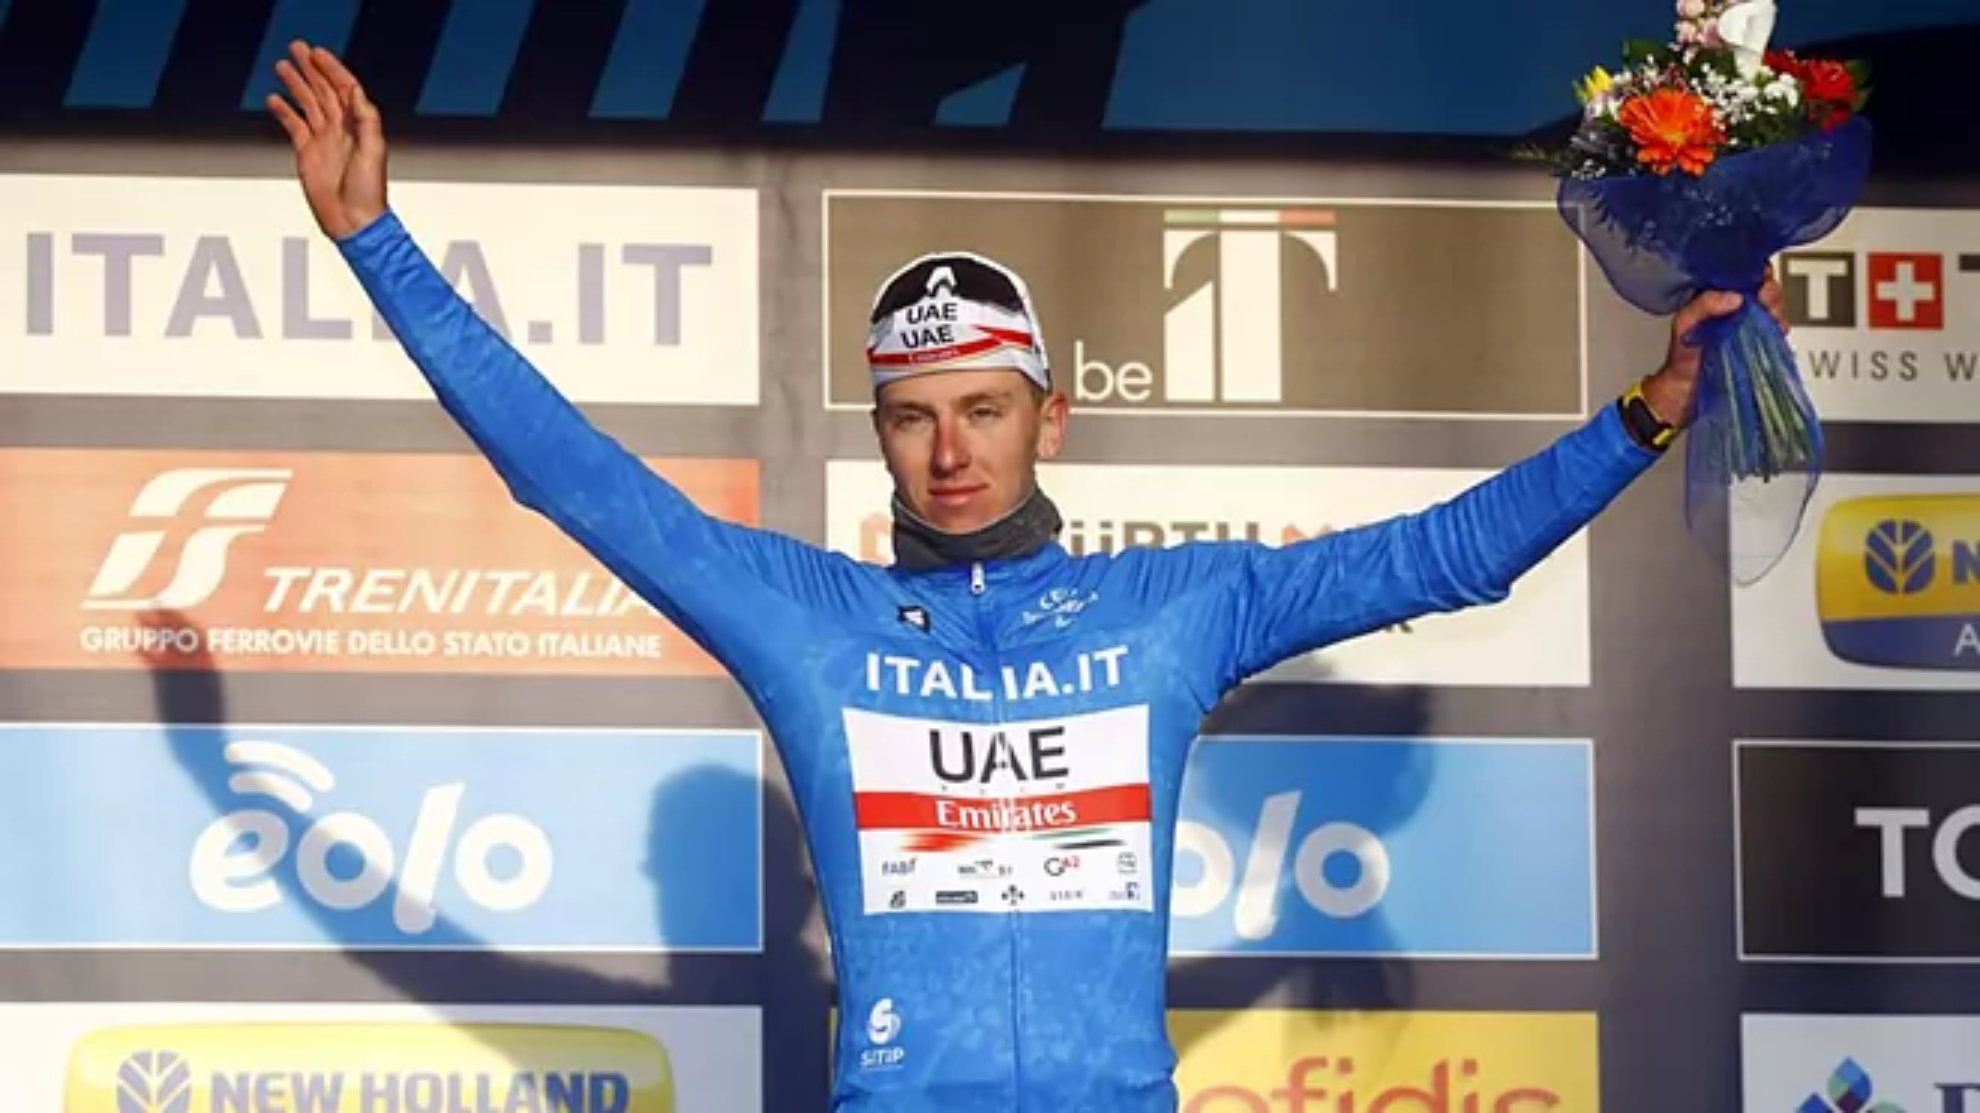 ¿Quién ganó la etapa de la Tirreno Adriático